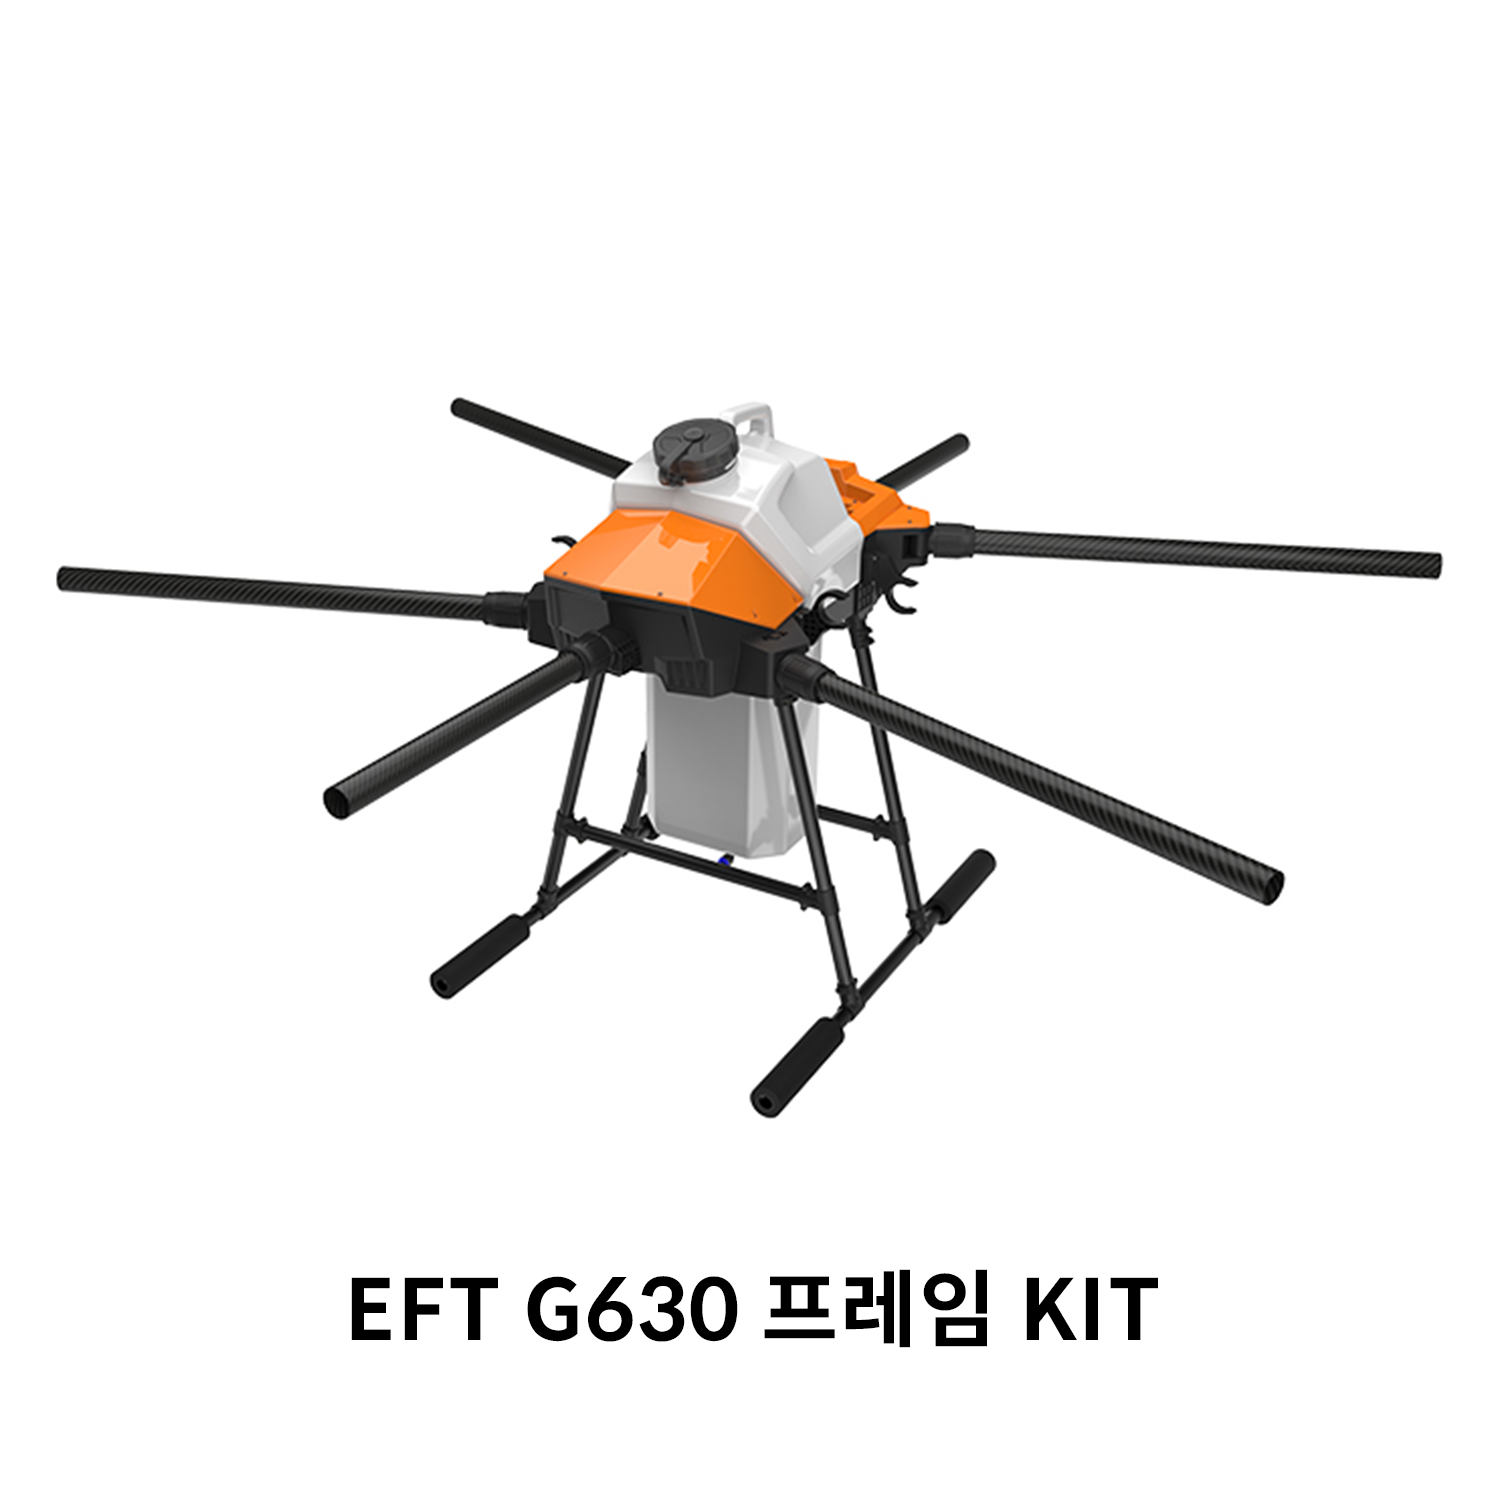 EFT G630 프레임 KIT 농업 방제 드론 헬셀